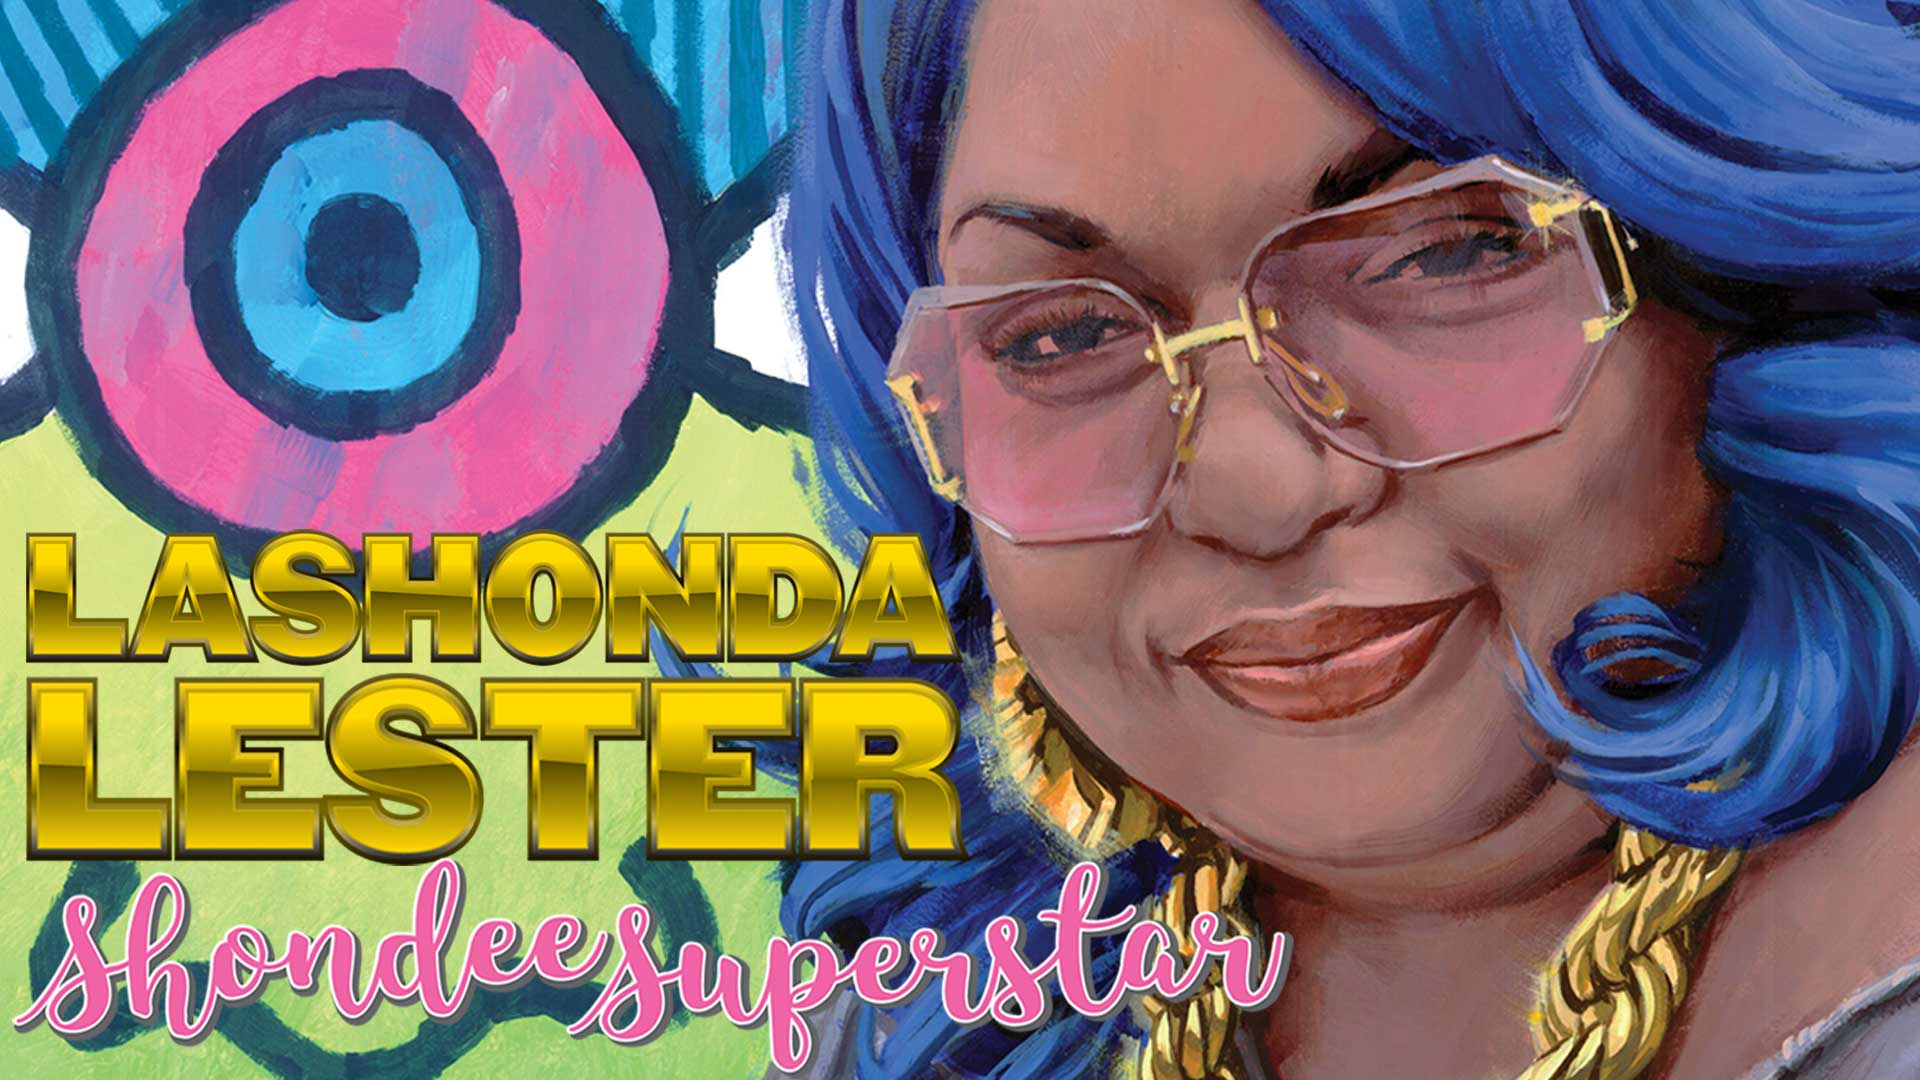 Lashonda Lester: Shondee Superstar